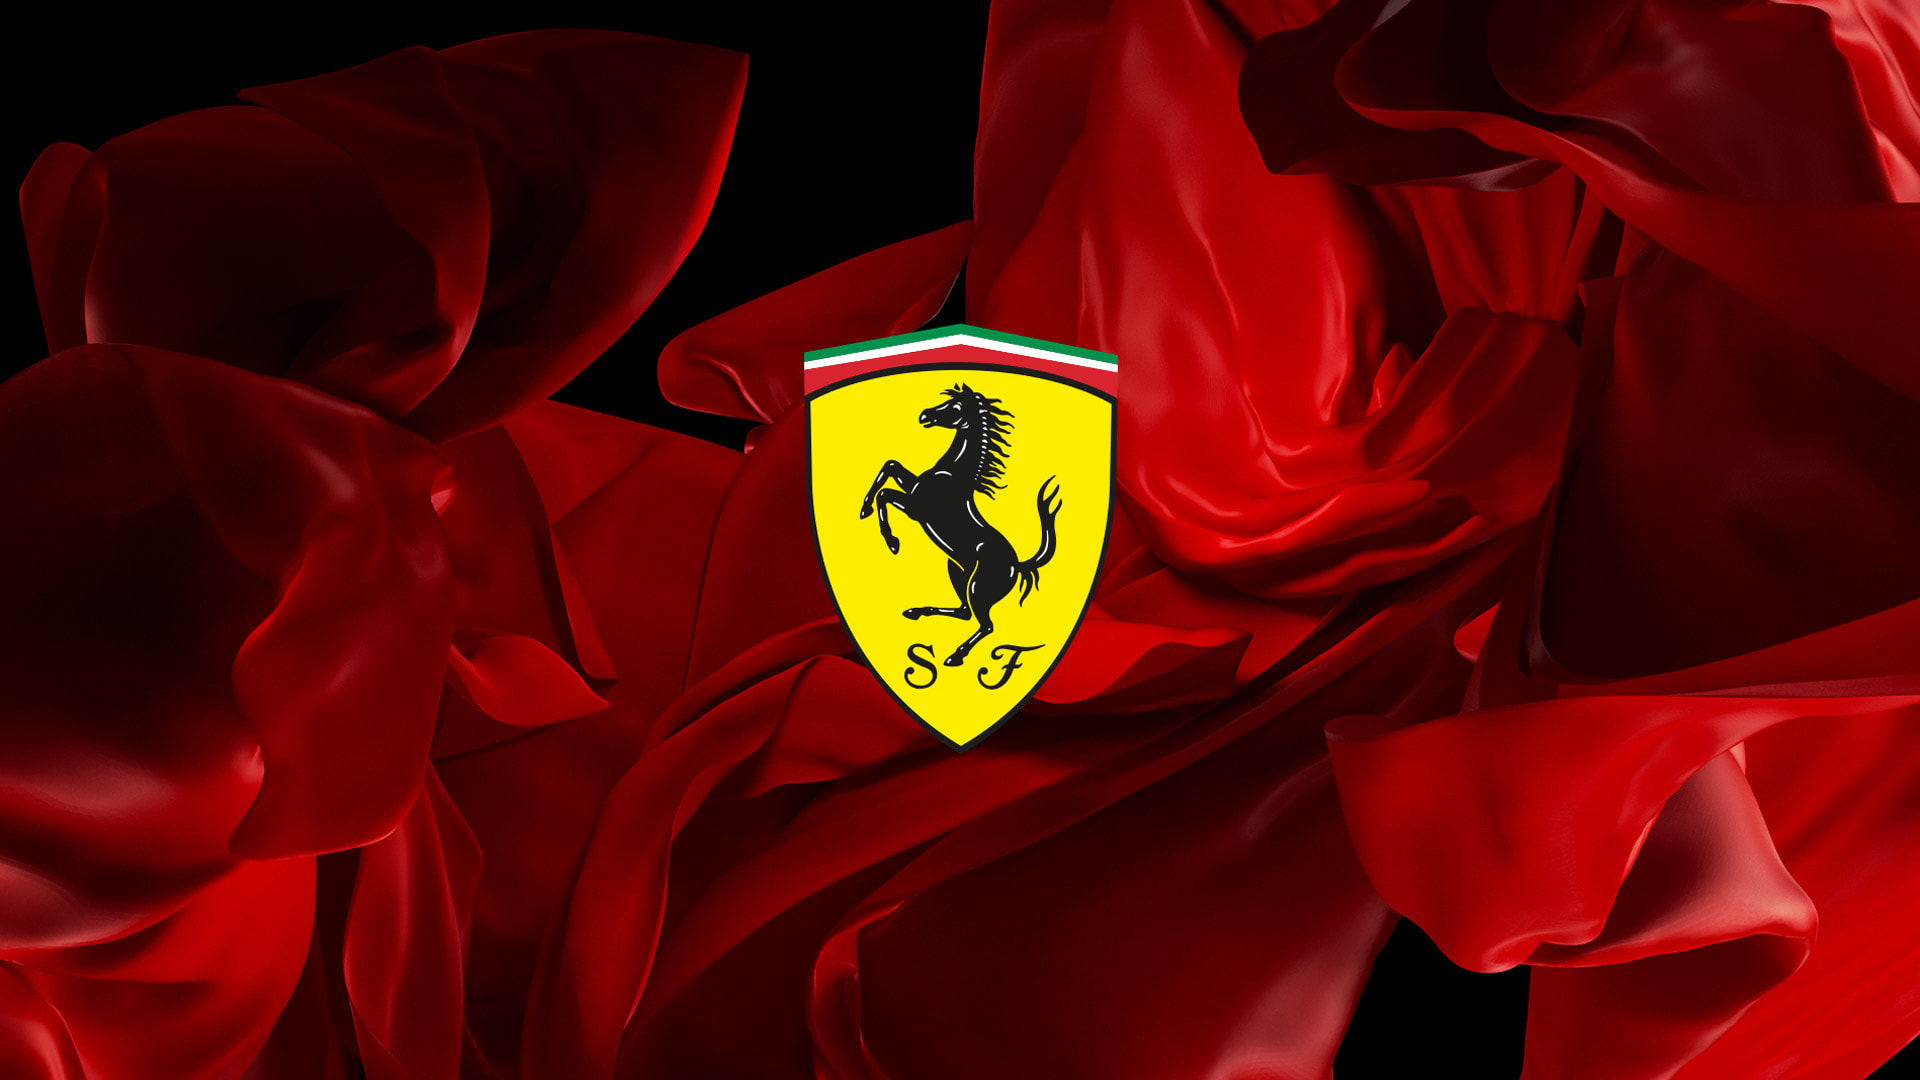 Ferrari fire-up their 2023 challenger at Maranello #F1 @ScuderiaFerrari ... Tweet From Marvel